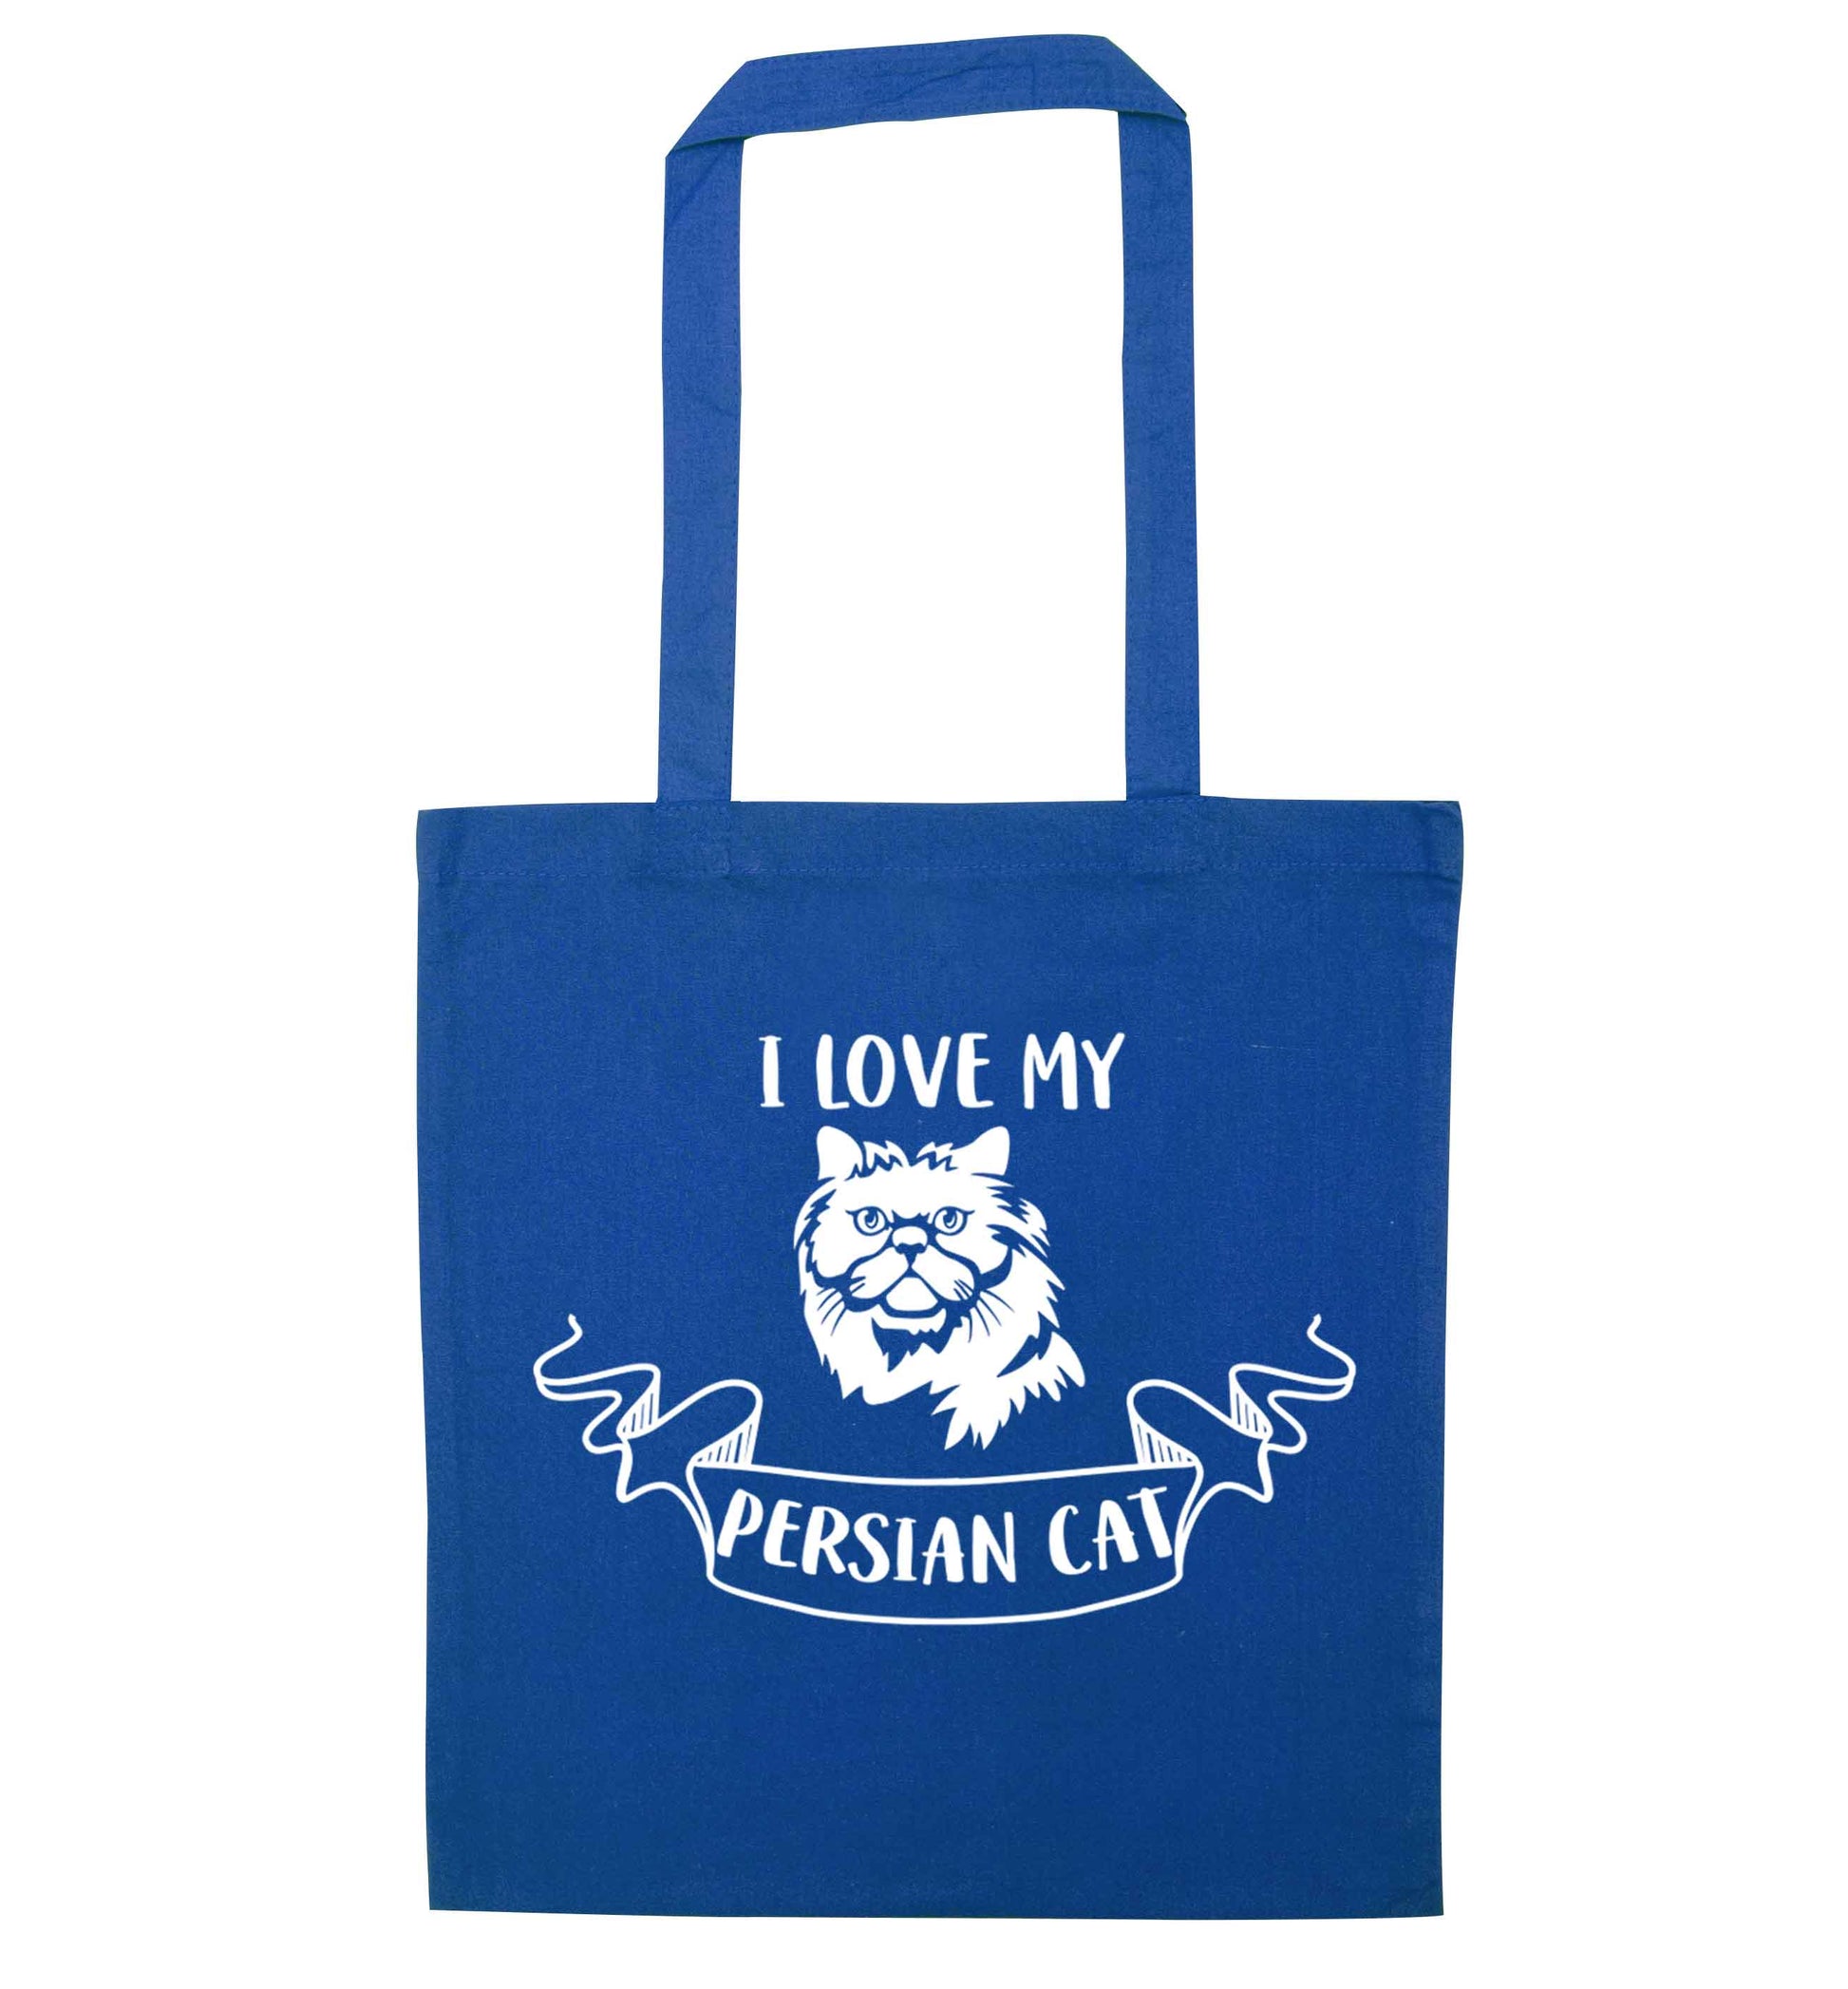 I love my persian cat blue tote bag